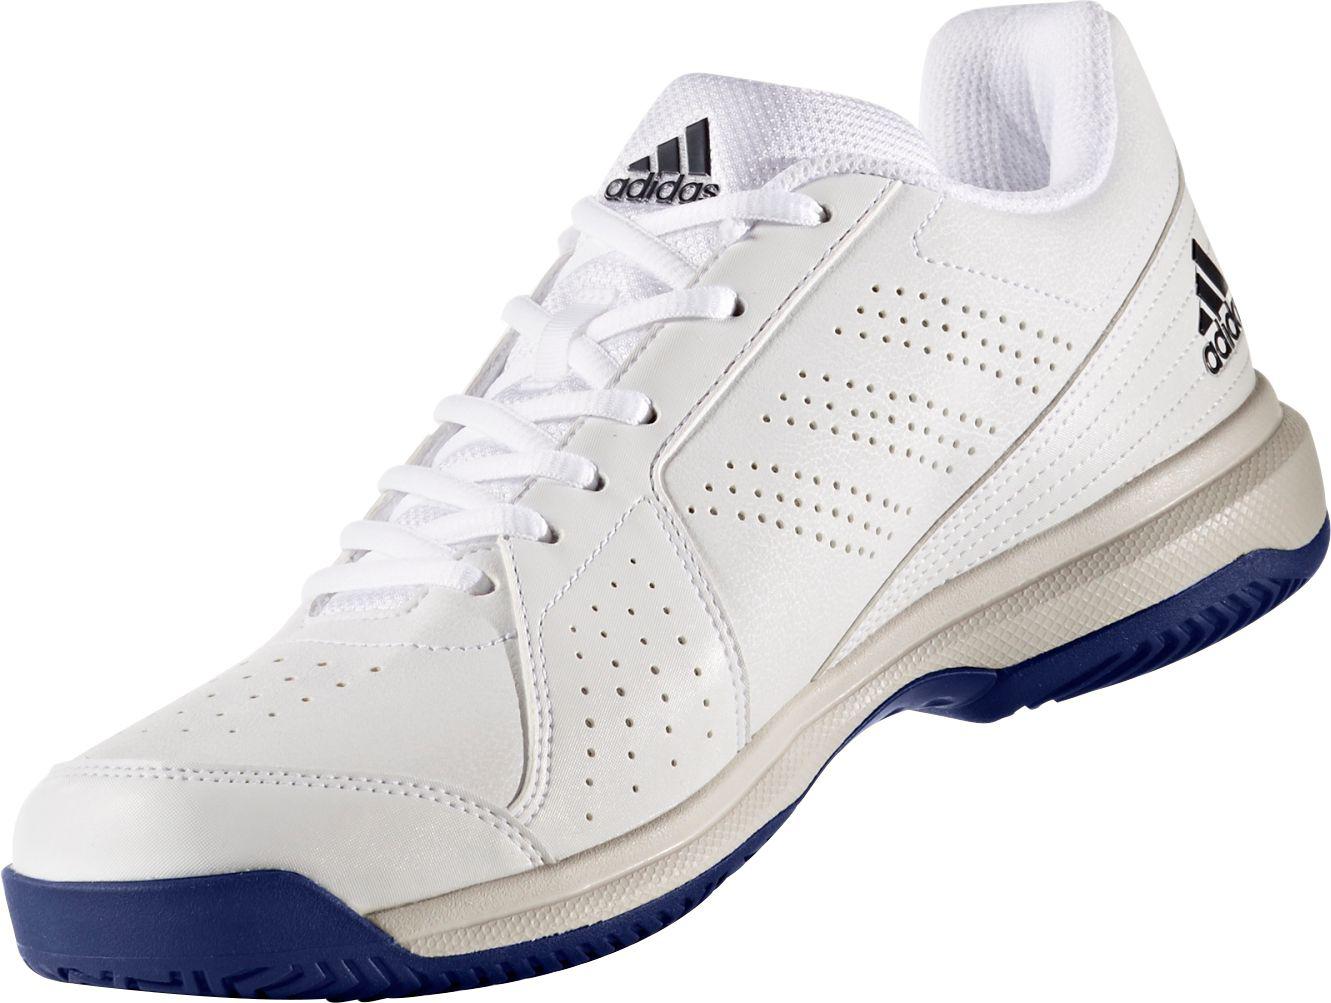 adidas approach mens tennis shoes